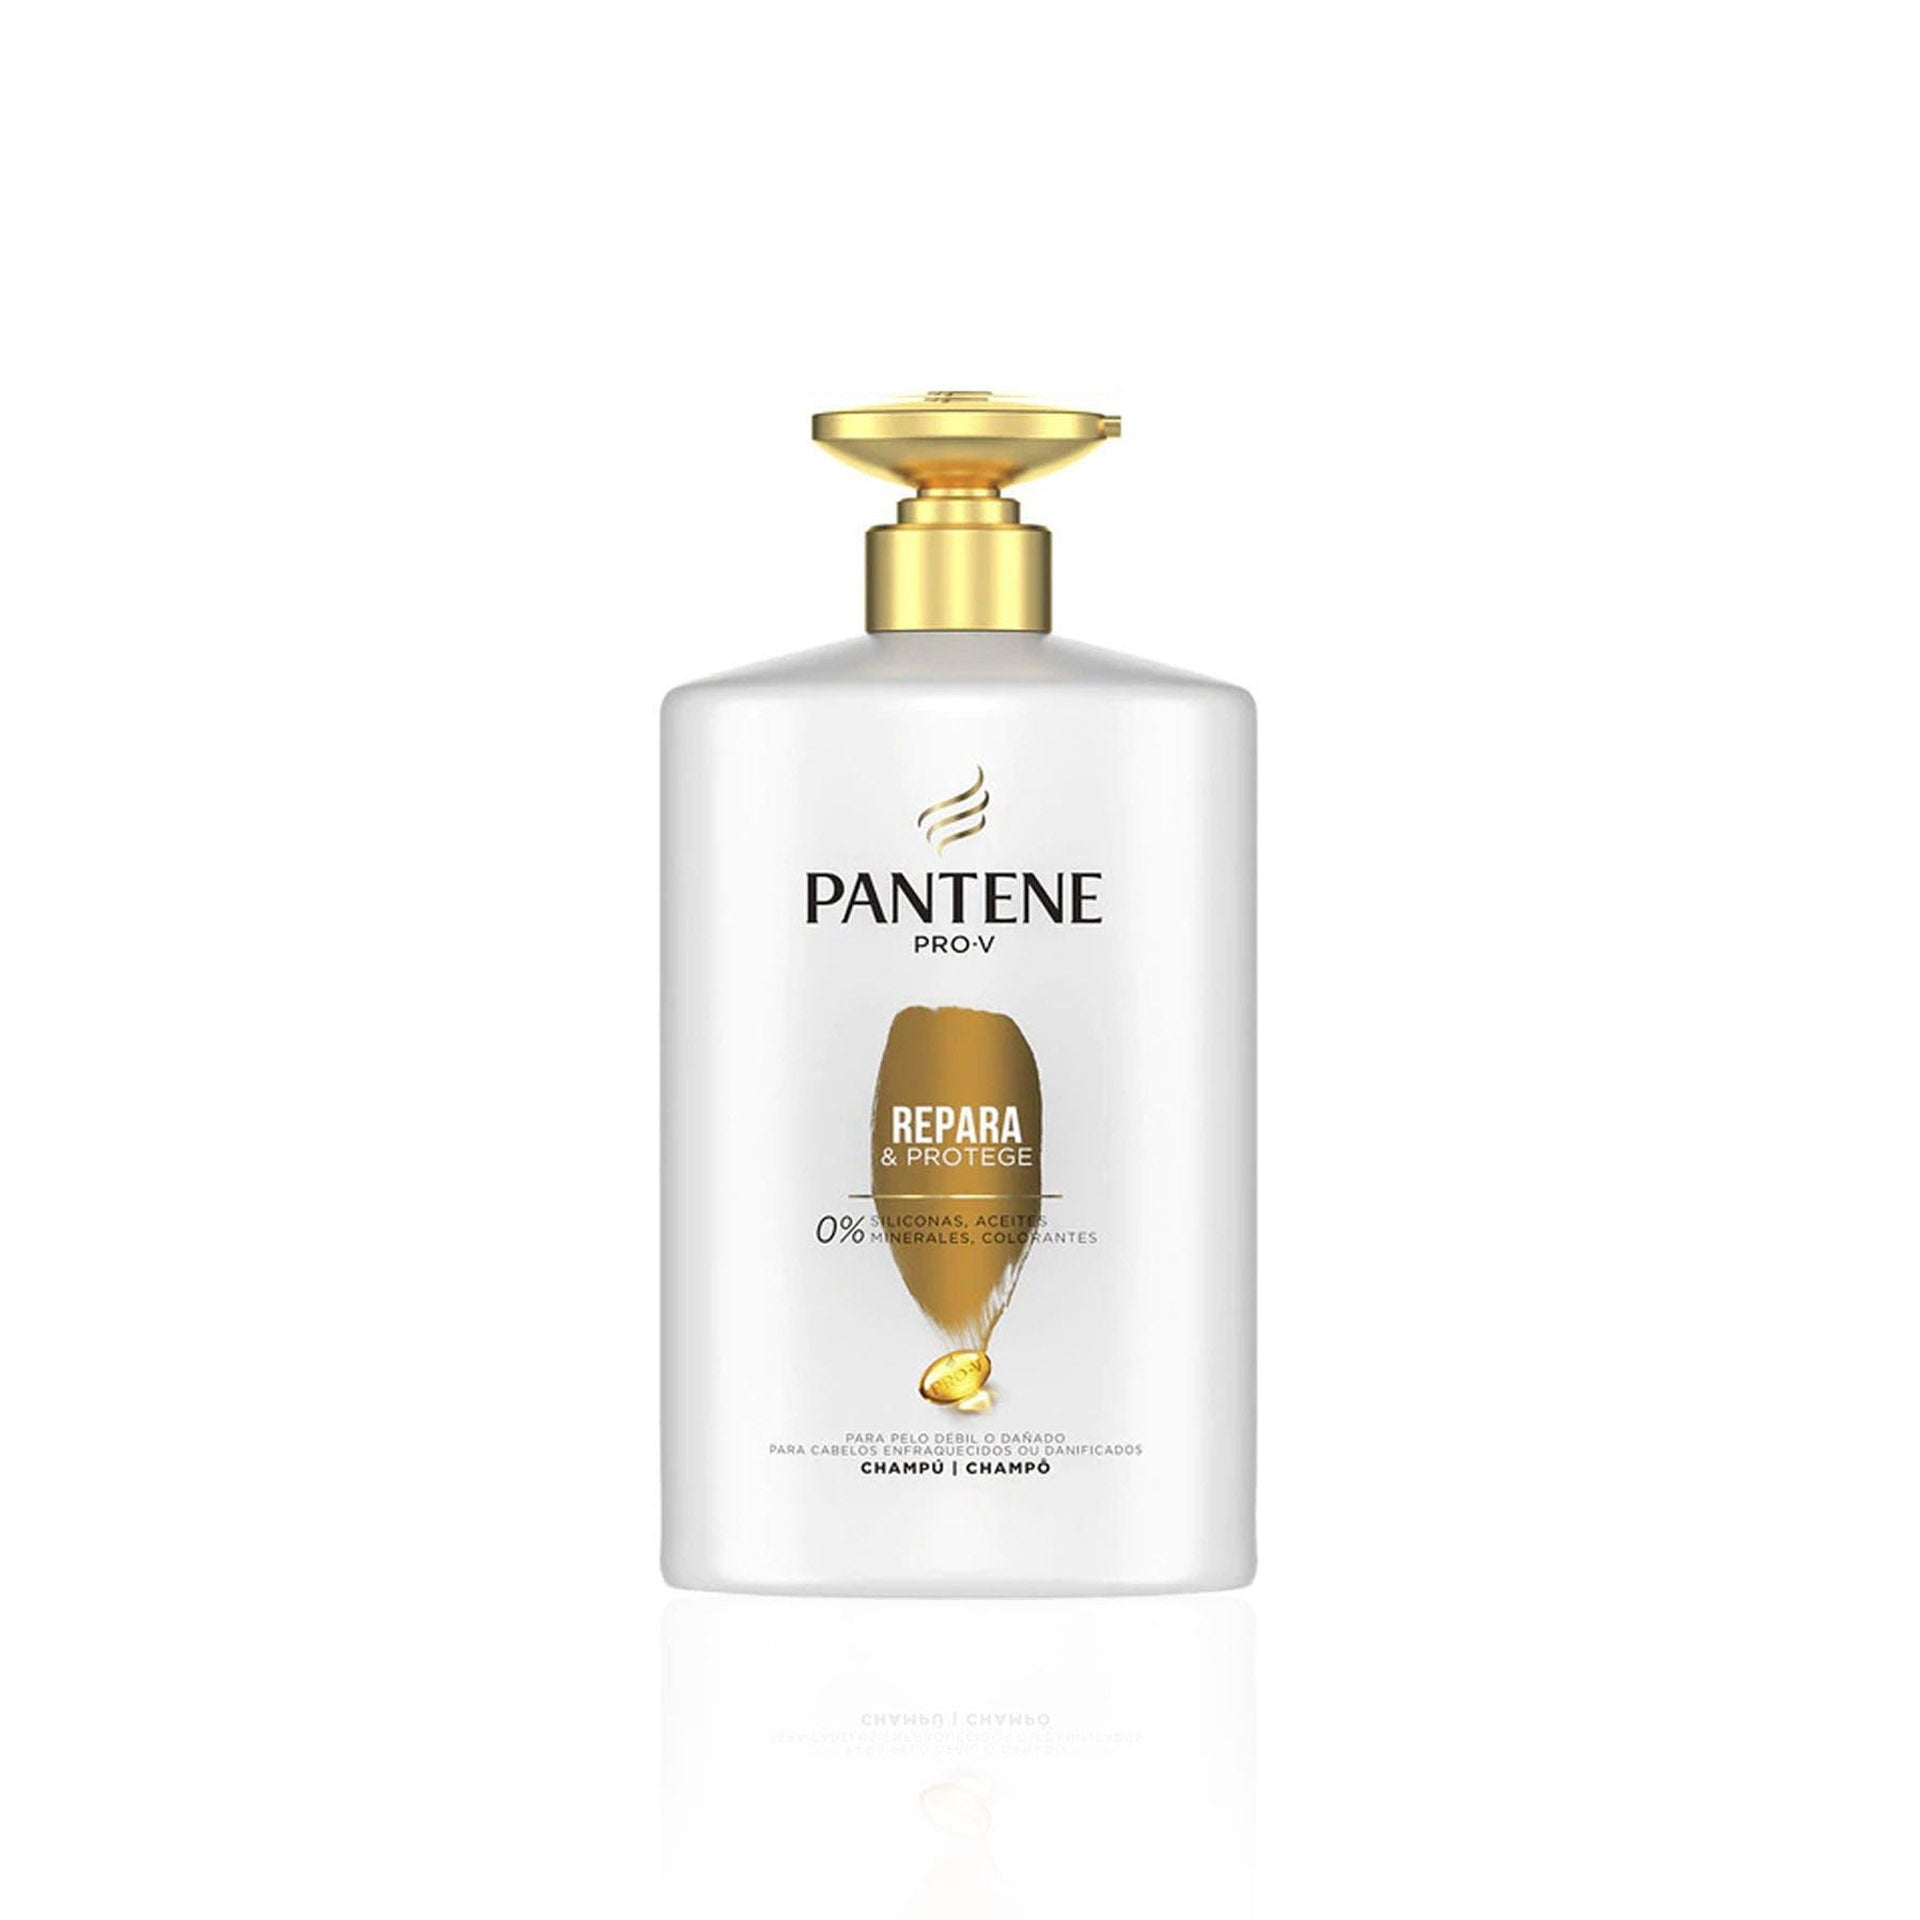 Pantene Shampoo Repair And Protects 1000 Ml